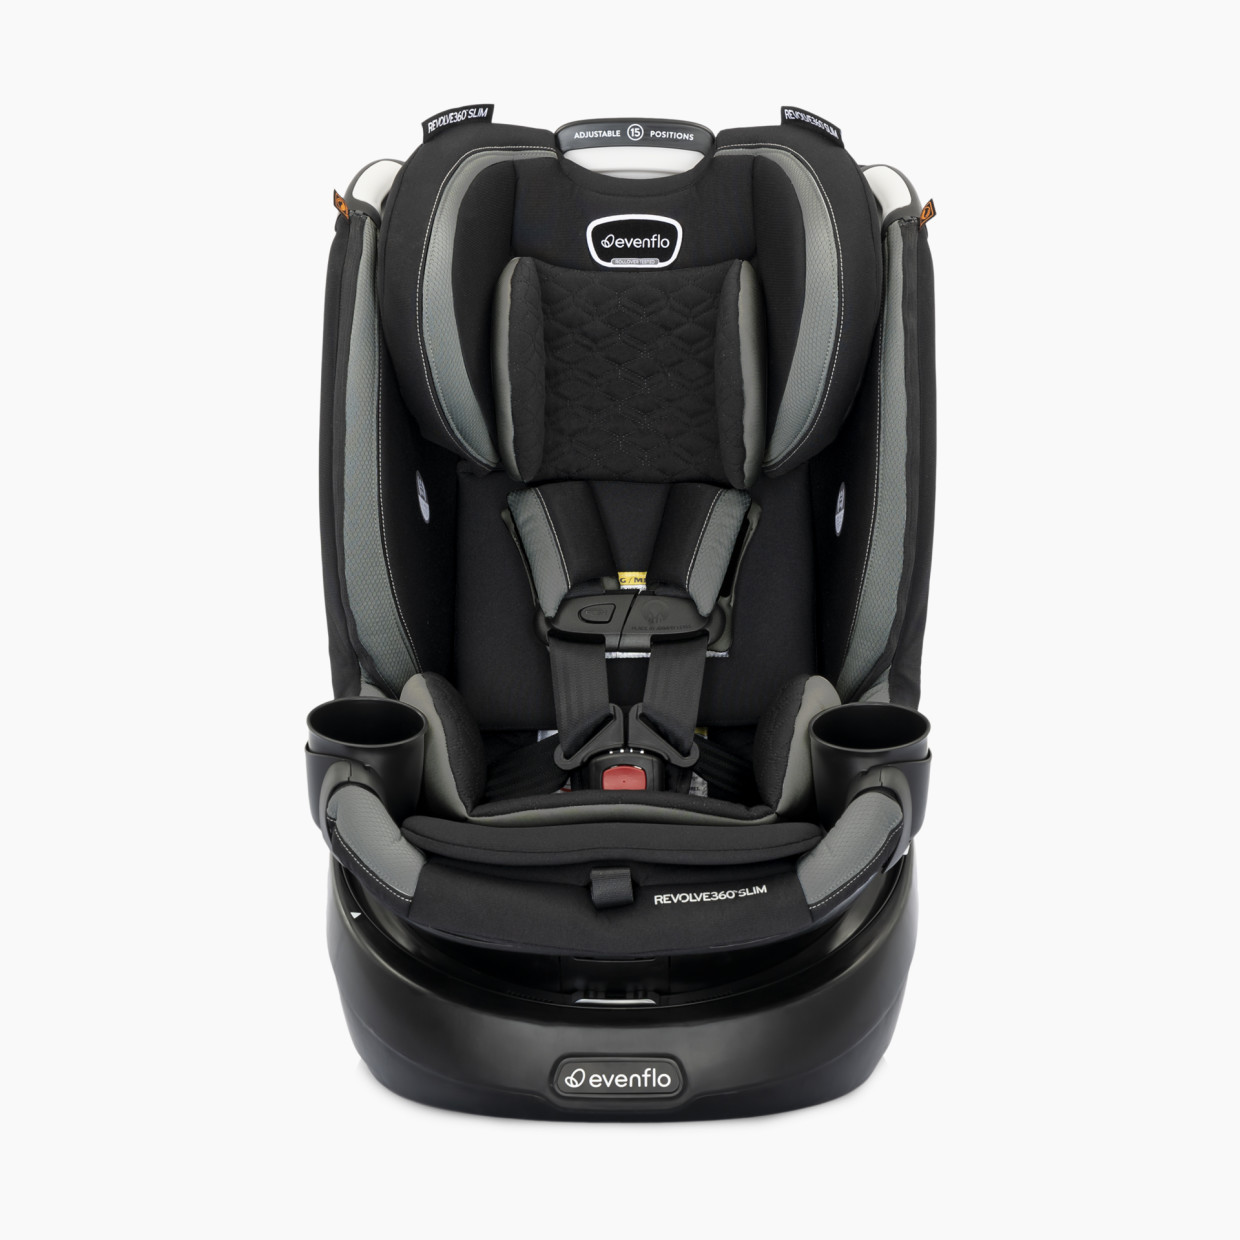 Evenflo Revolve 360 Slim 2 in 1 Convertible Rotating Car Seat - Salem Black.